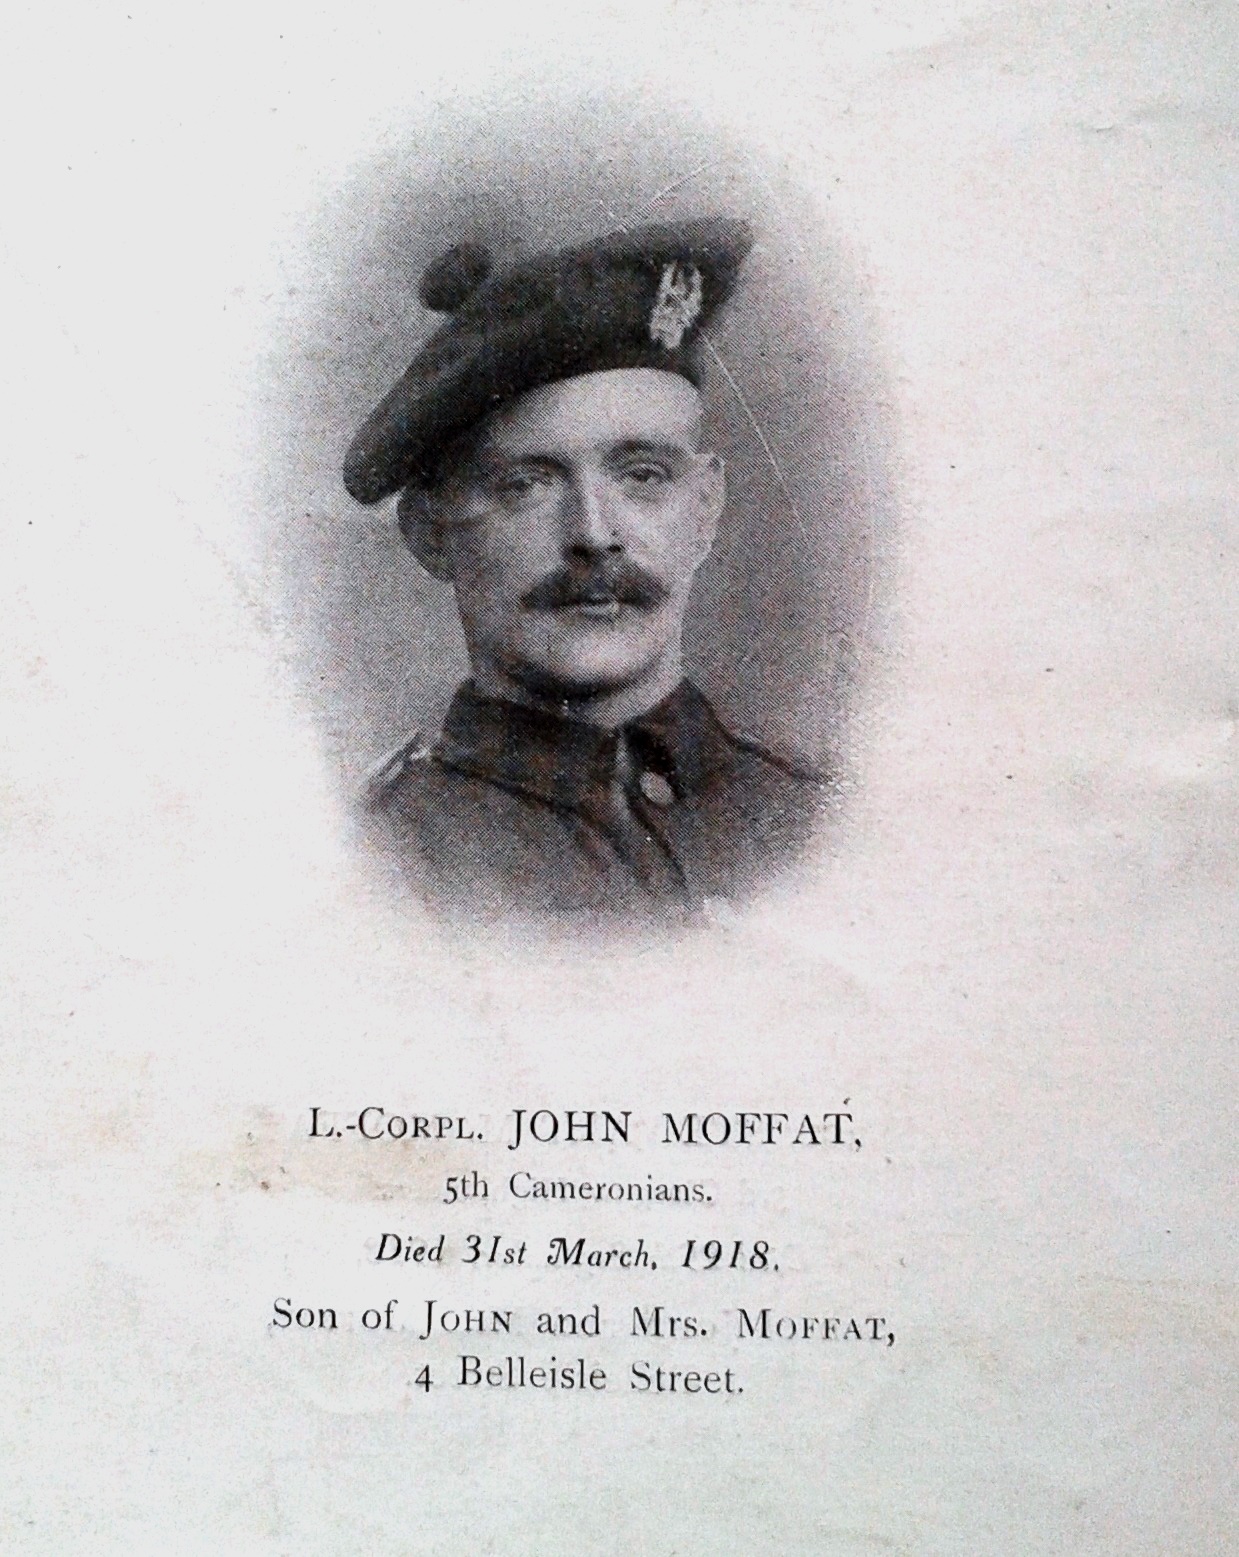 Lance Corporal John Moffat, 5th Cameronians